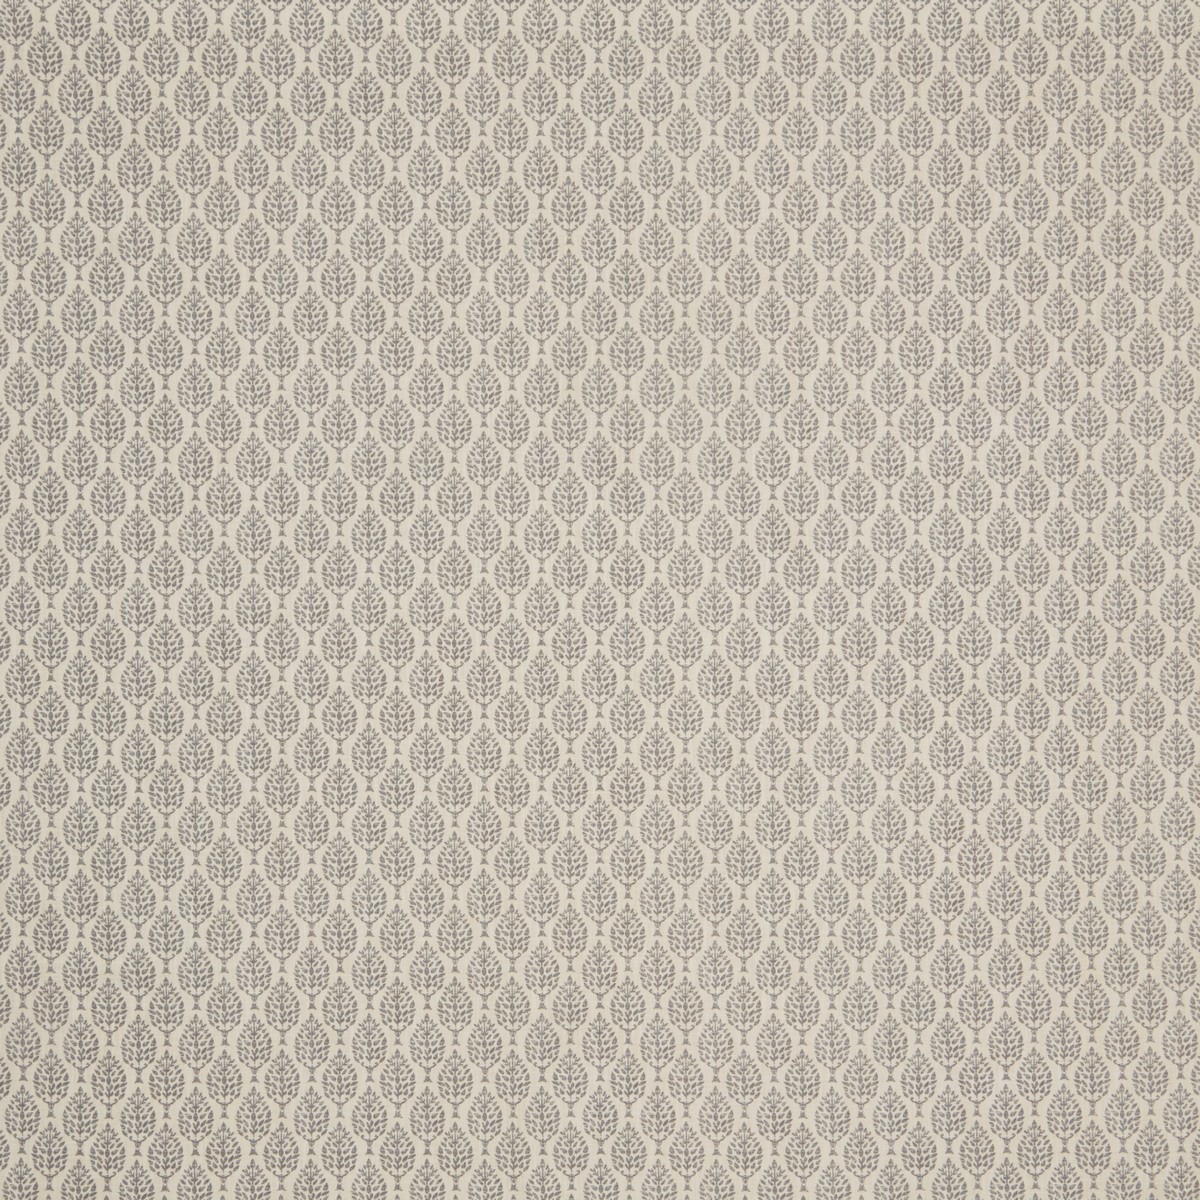 Kemble Filigree Fabric by iLiv